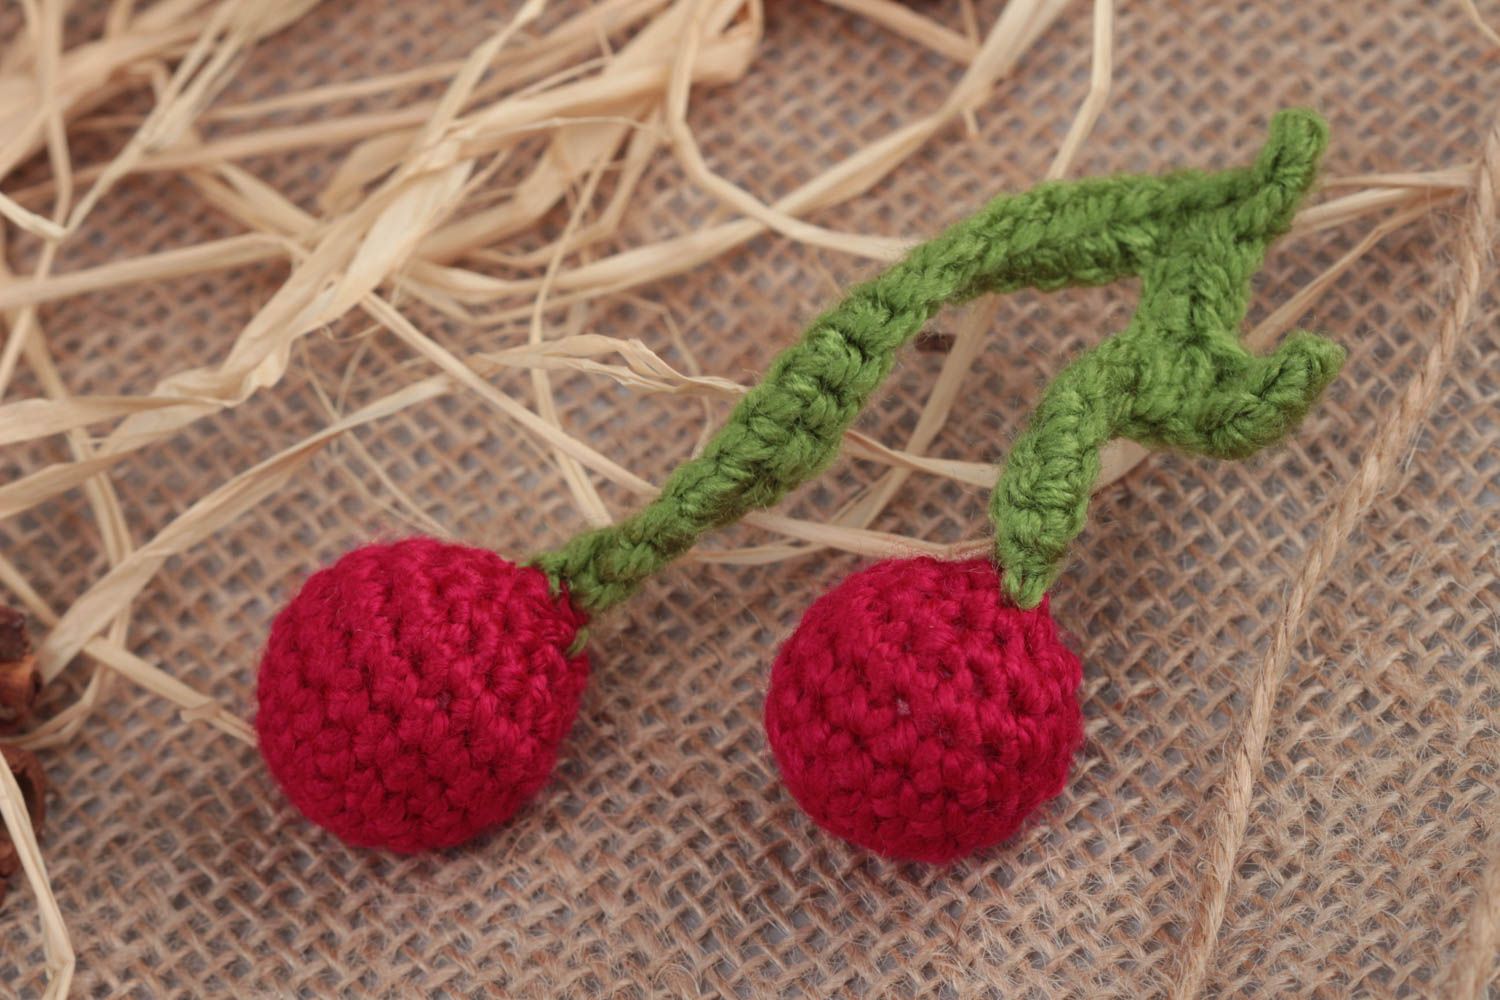 Handmade small designer crochet soft toy cherry for kids and interior decor photo 1